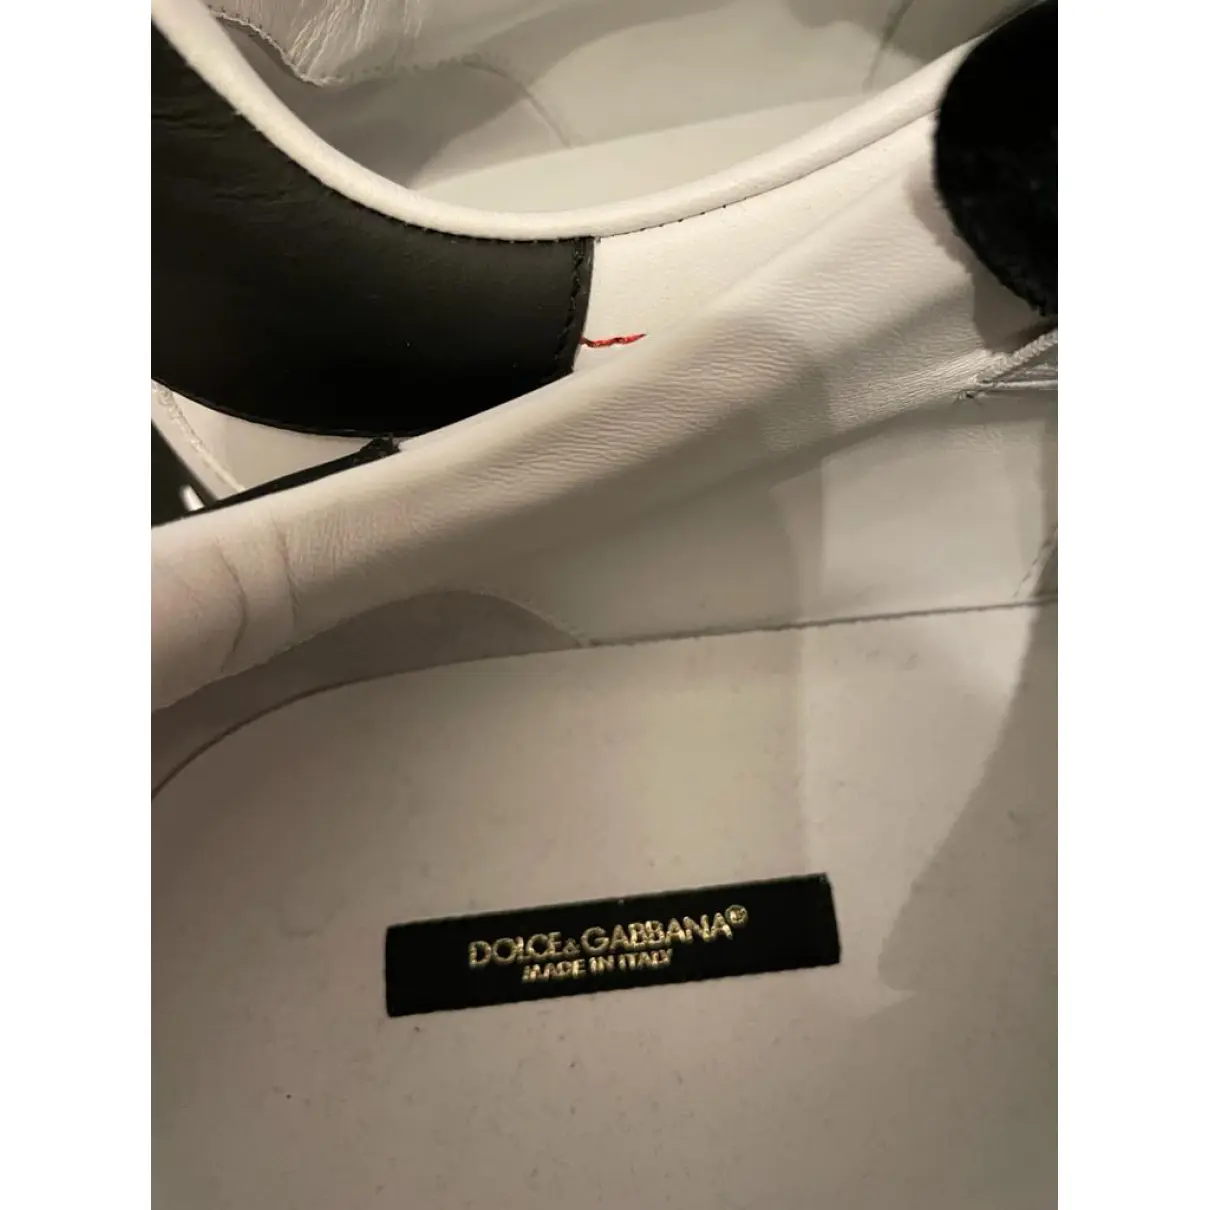 Buy Dolce & Gabbana Portofino leather low trainers online